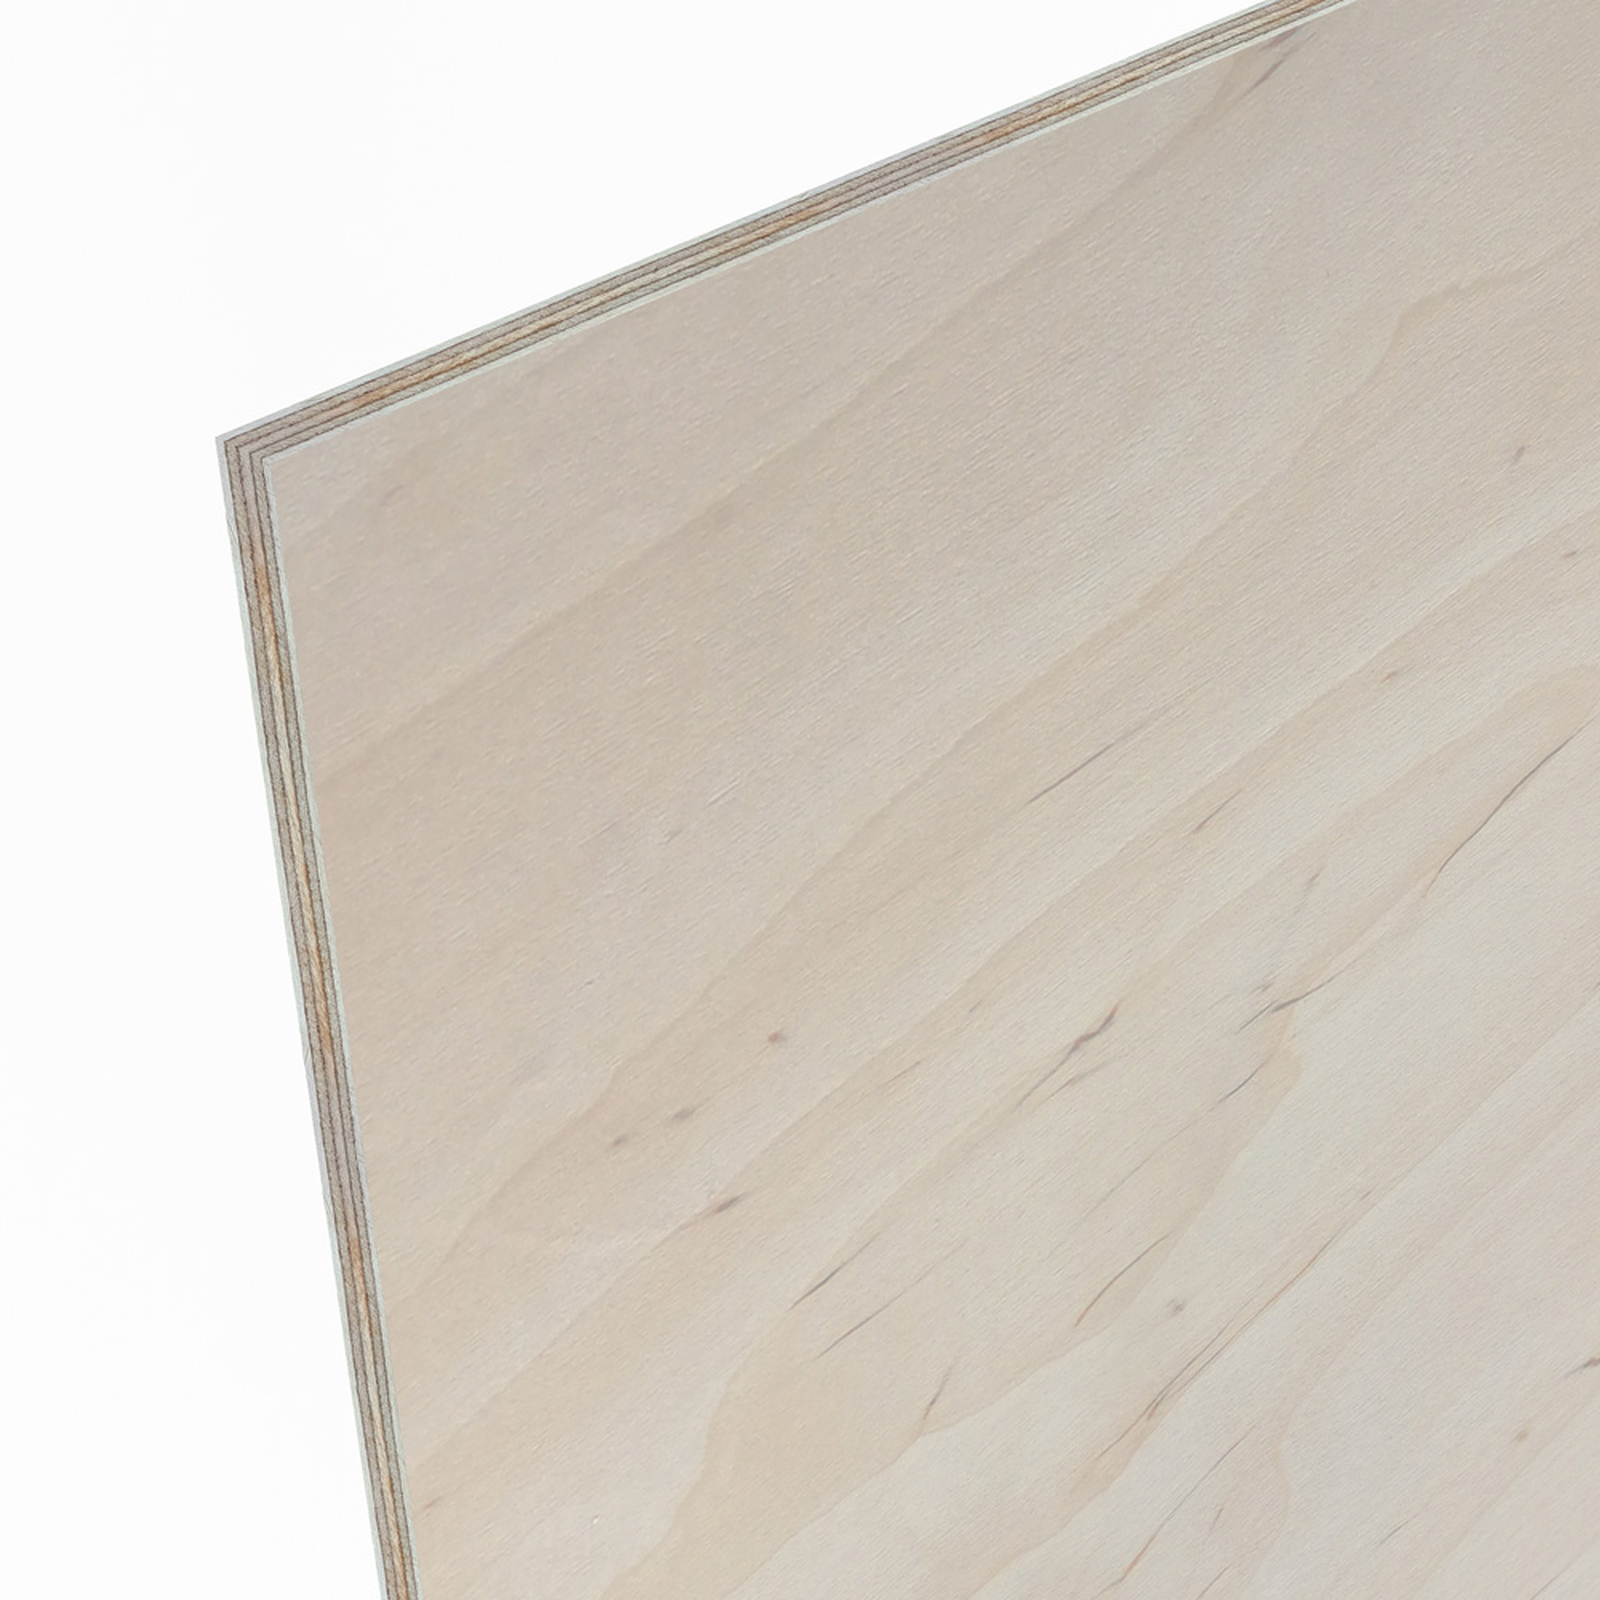 1 Platte Sperrholz Multiplex Birke  4mm 120 x 50 cm 9,9€/m² Holzplatte 